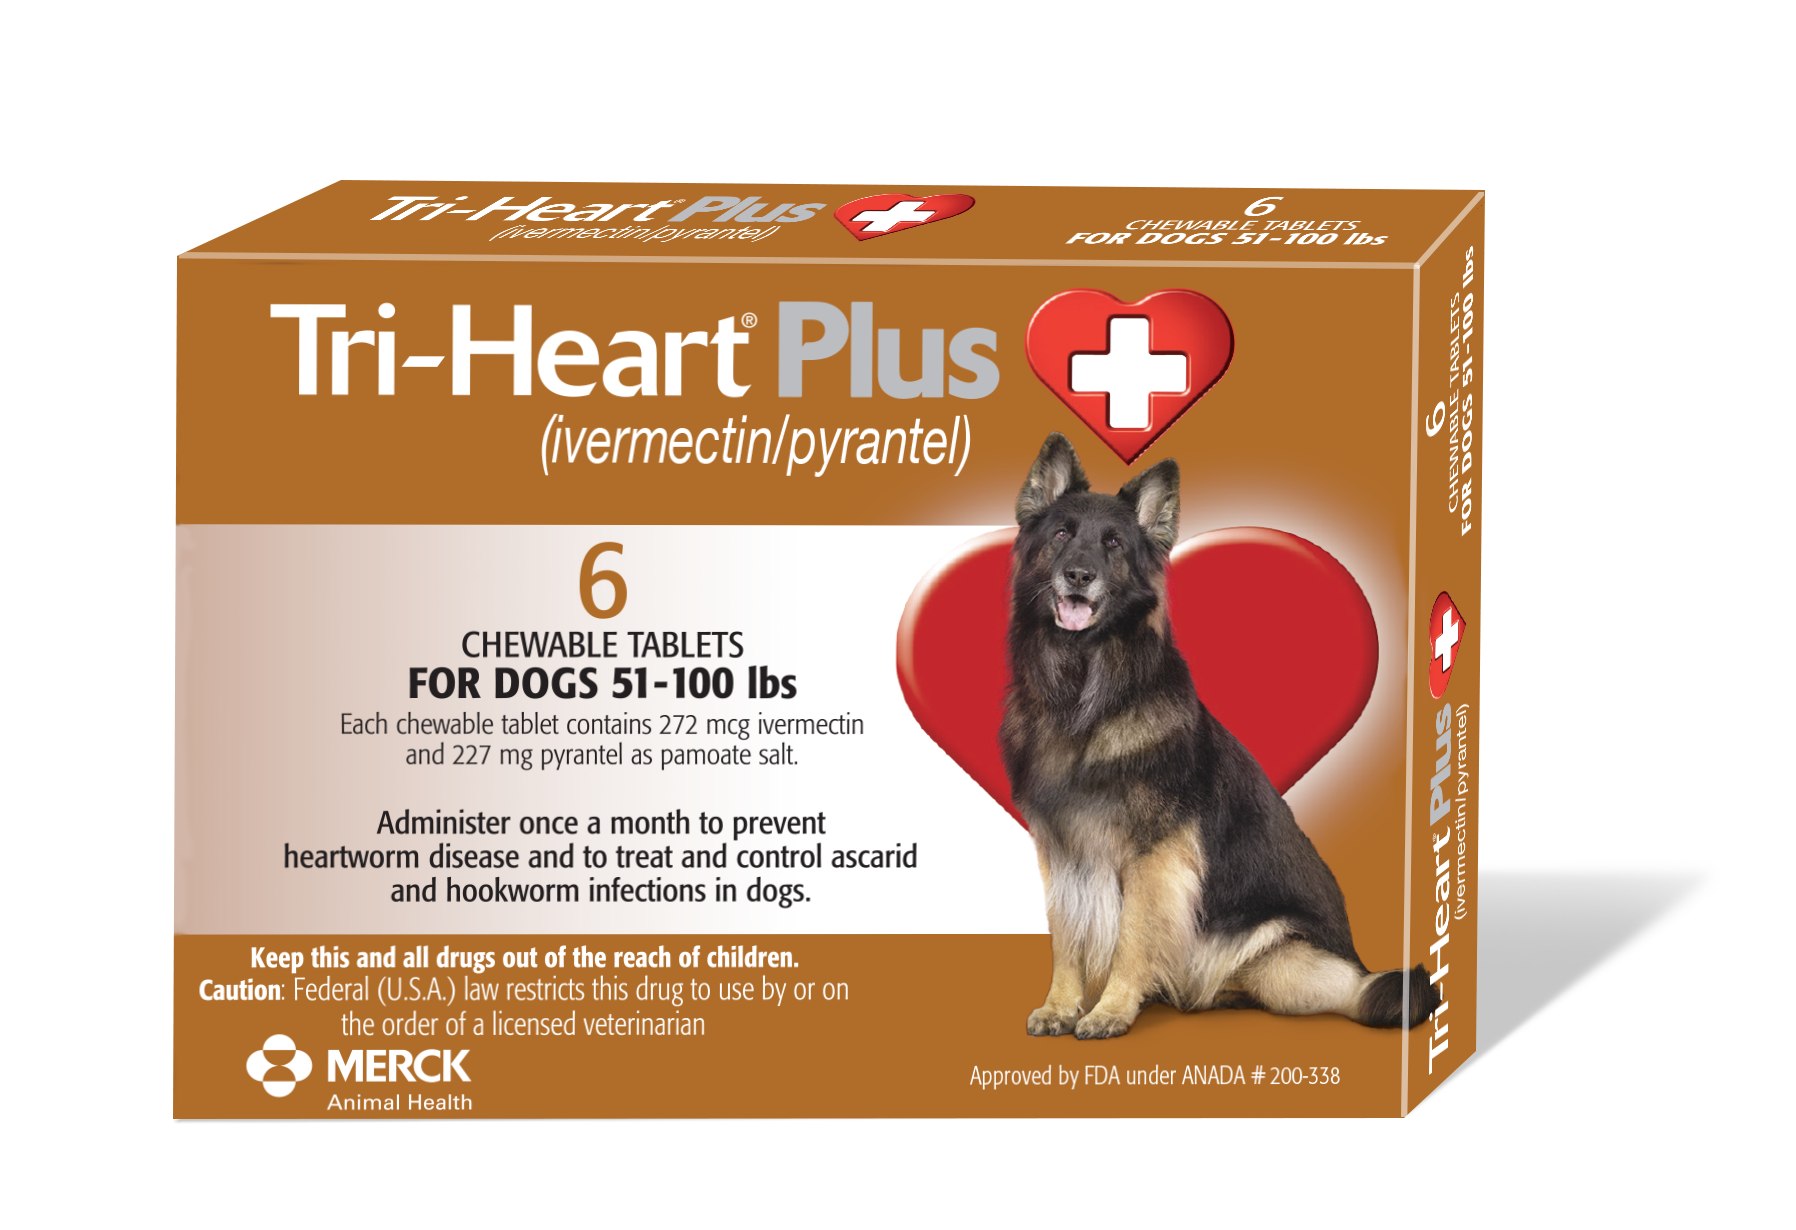 tri-heart-plus-chewable-tablets-ivermectin-pyrantel-merck-animal-health-usa